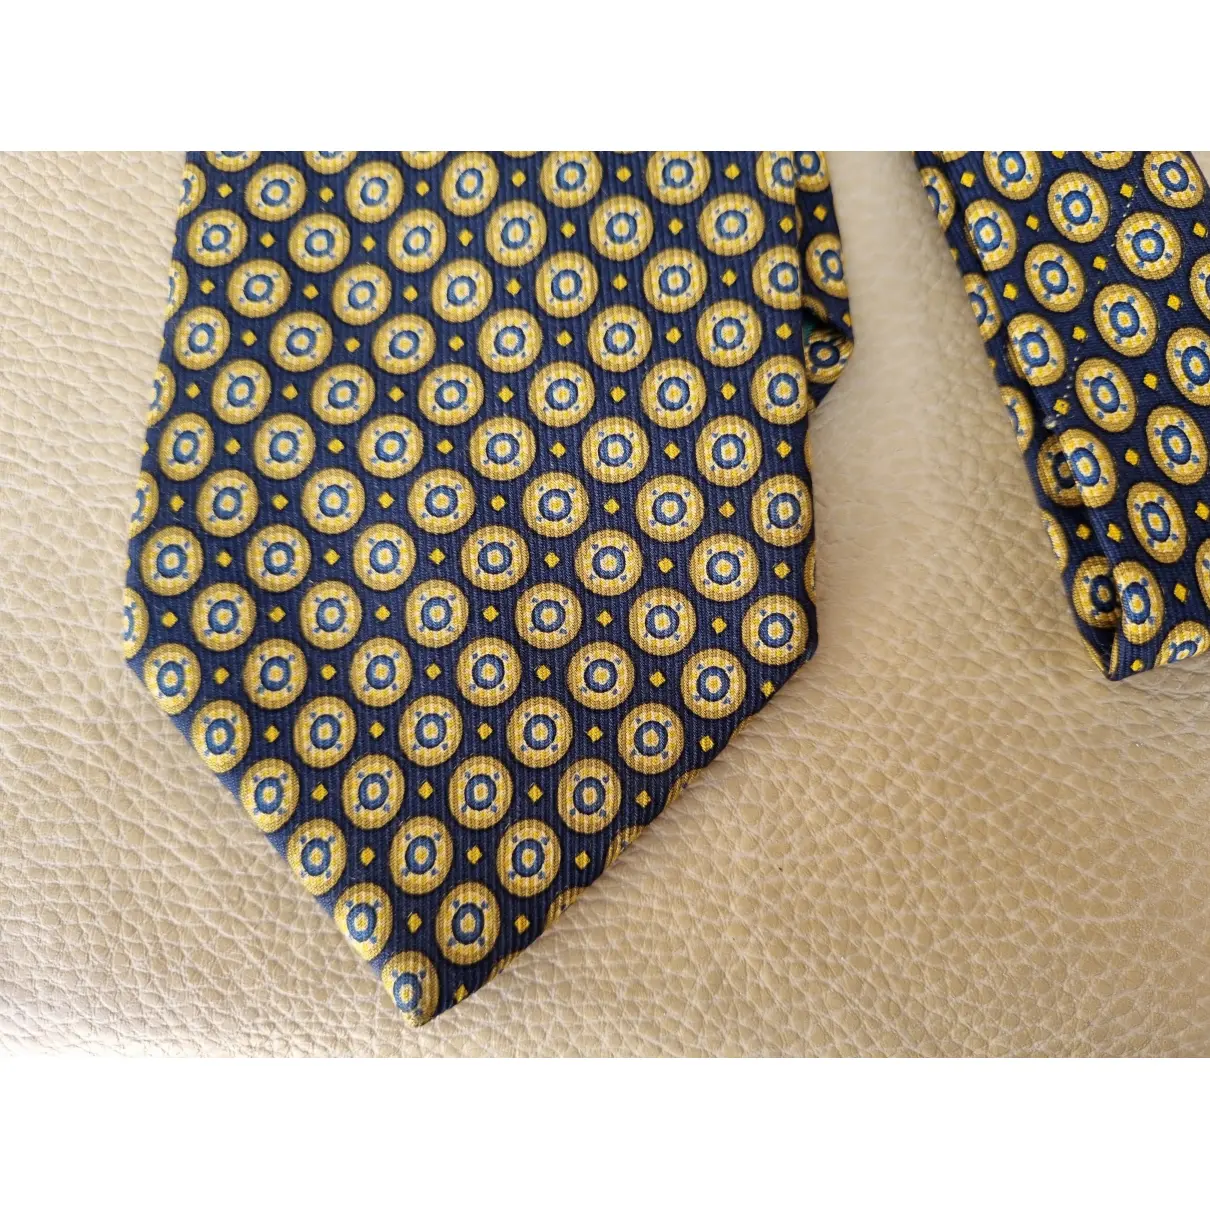 Buy Prada Silk tie online